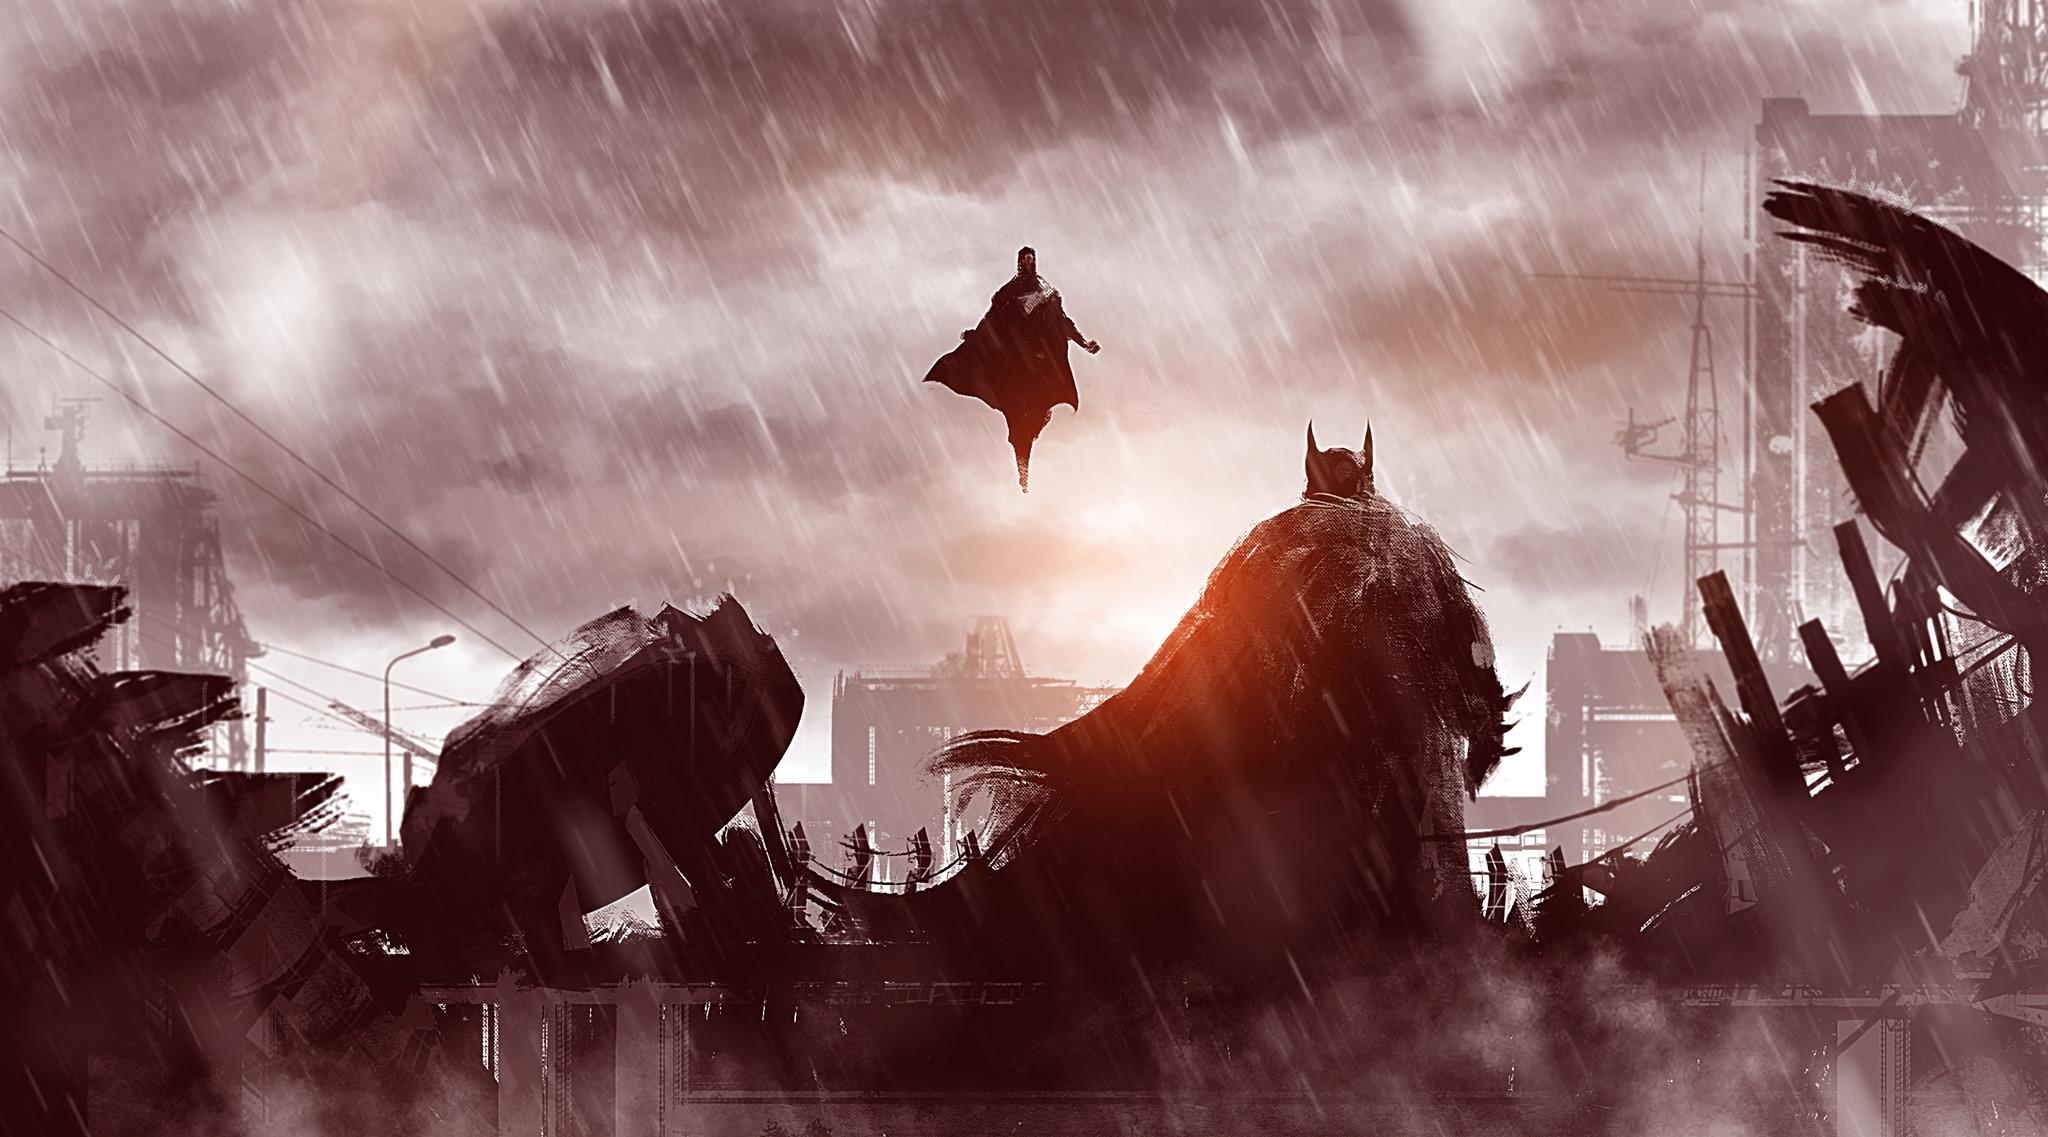 Cool Art Batman Vs Superman By Mer Tun Live For Films